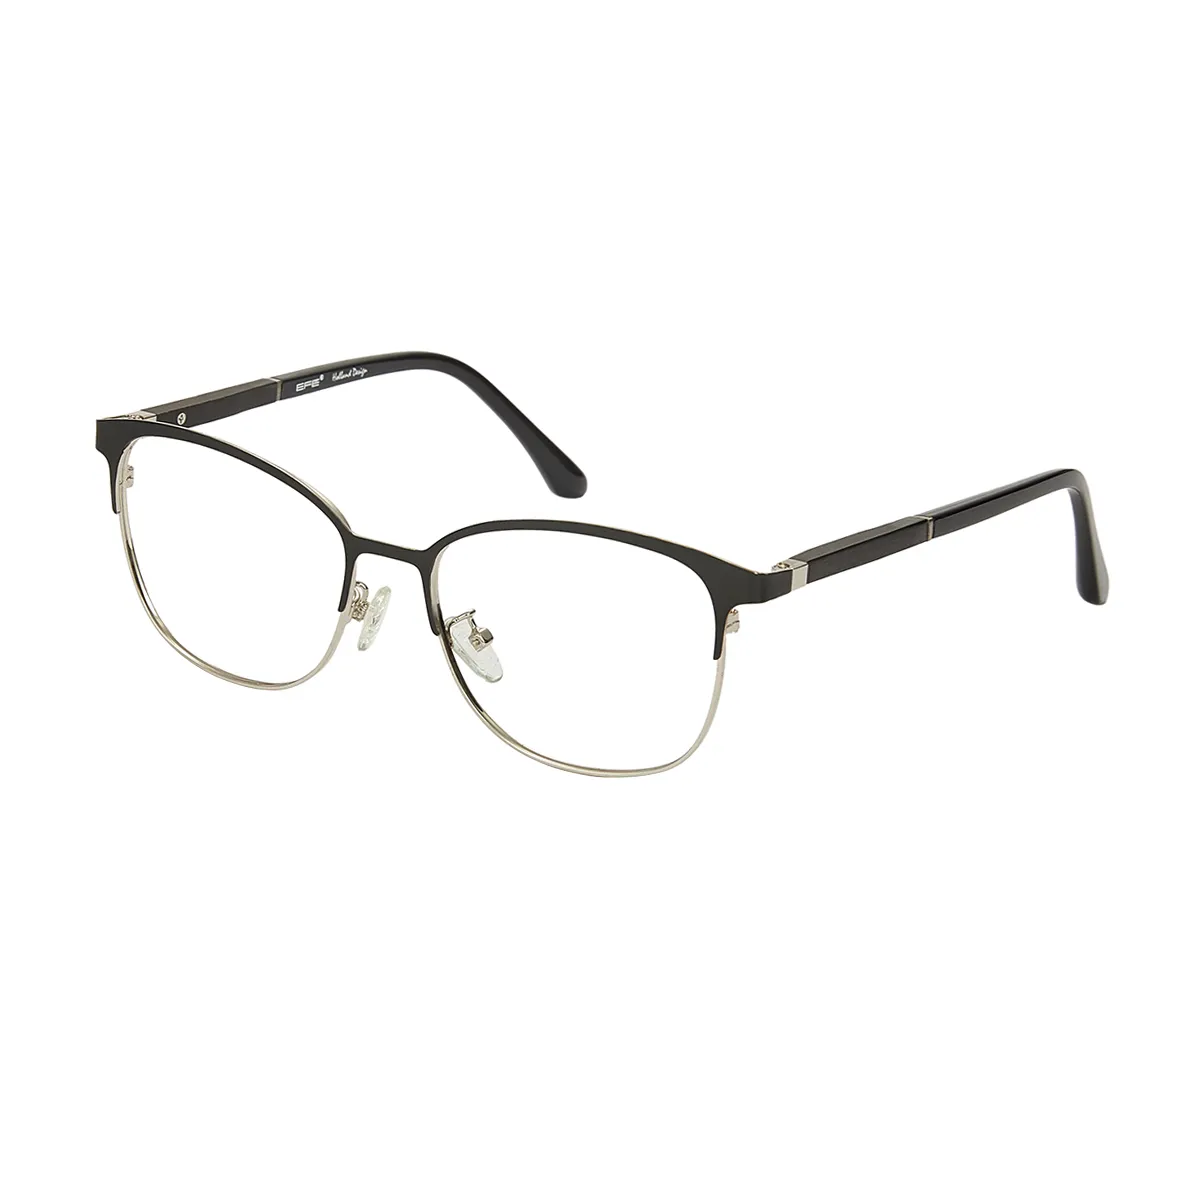 Frieda - Browline Black Glasses for Men